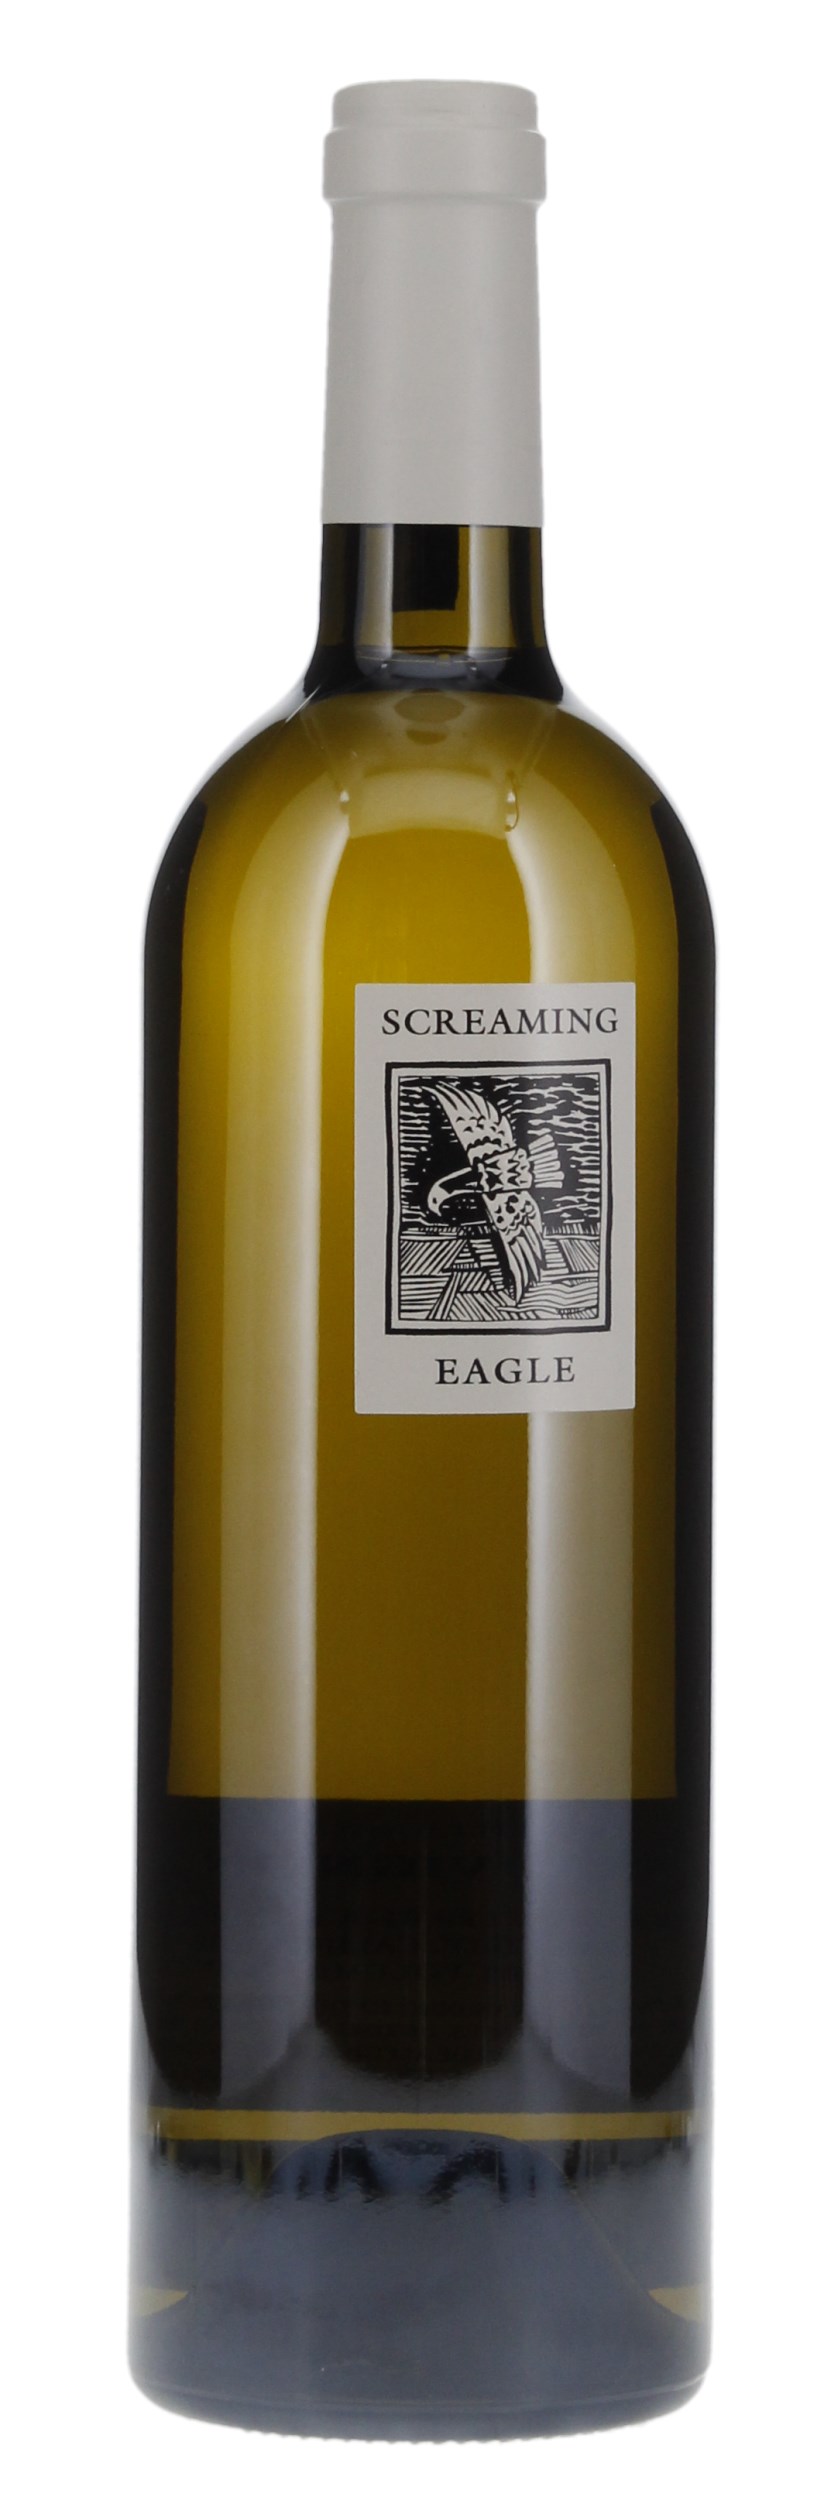 2018 Screaming Eagle Sauvignon Blanc, 750ml